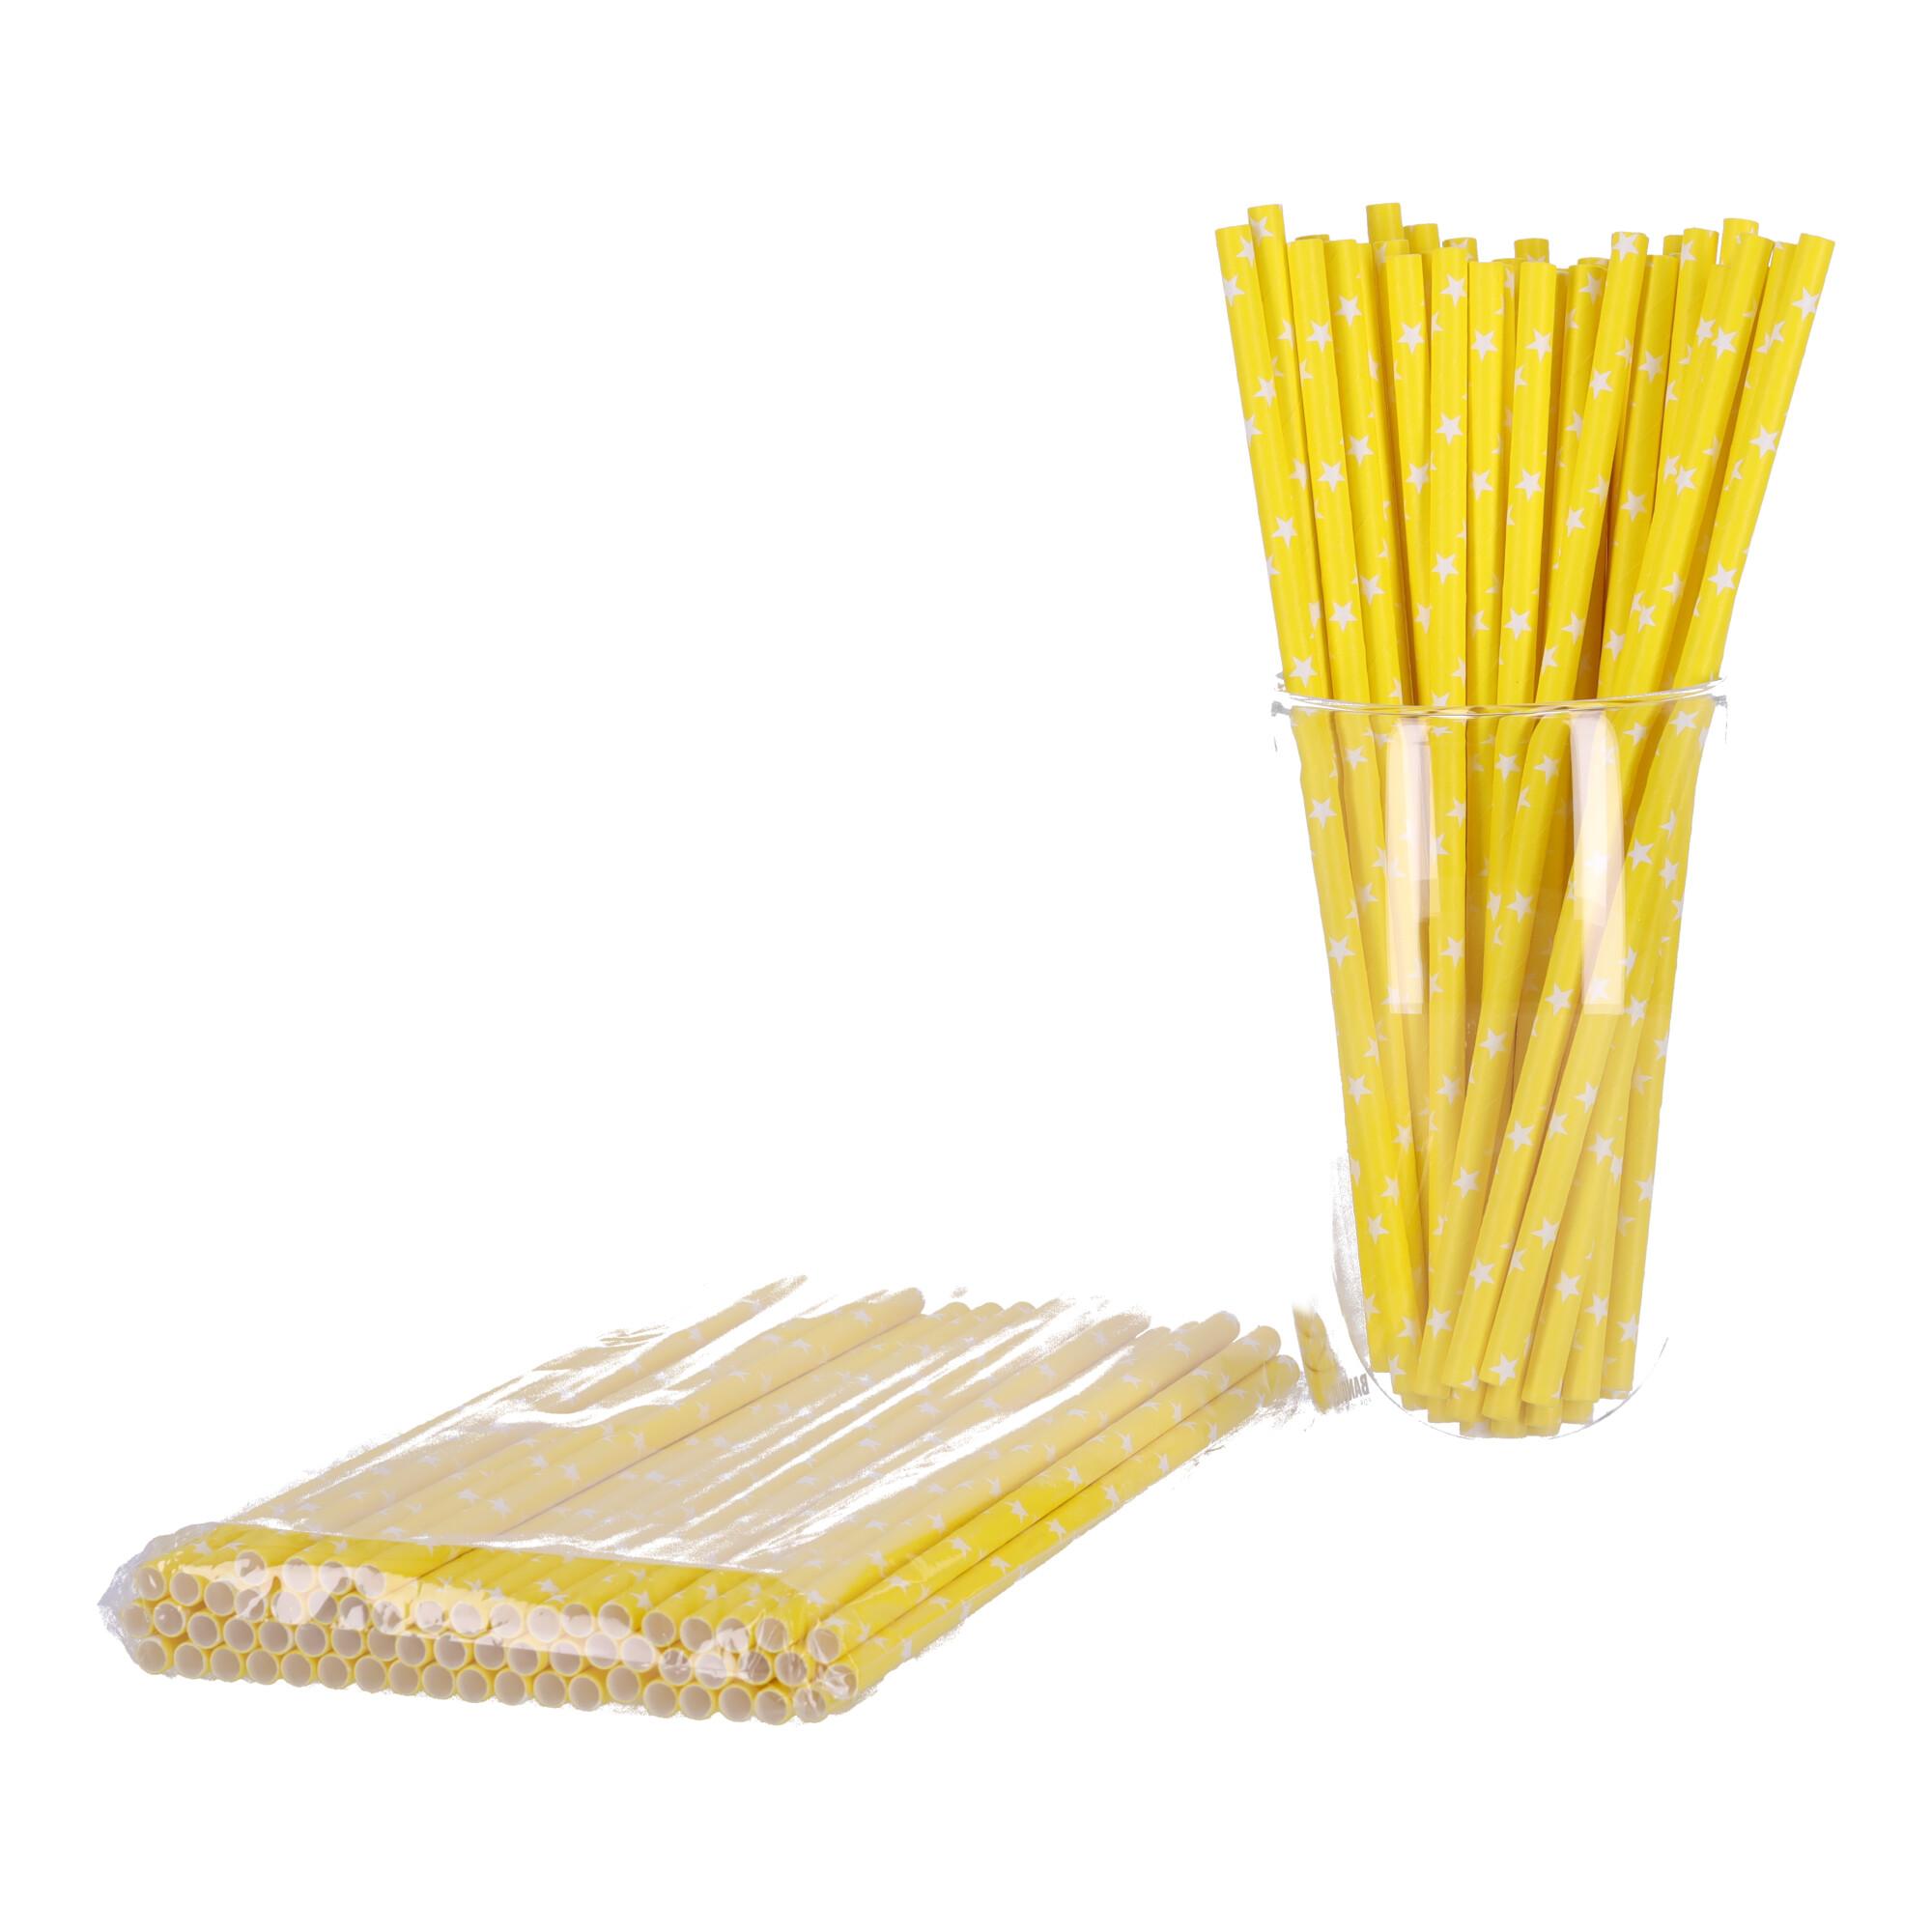 Paper straws 197mm x 6mm, 100 pcs - yellow with stars